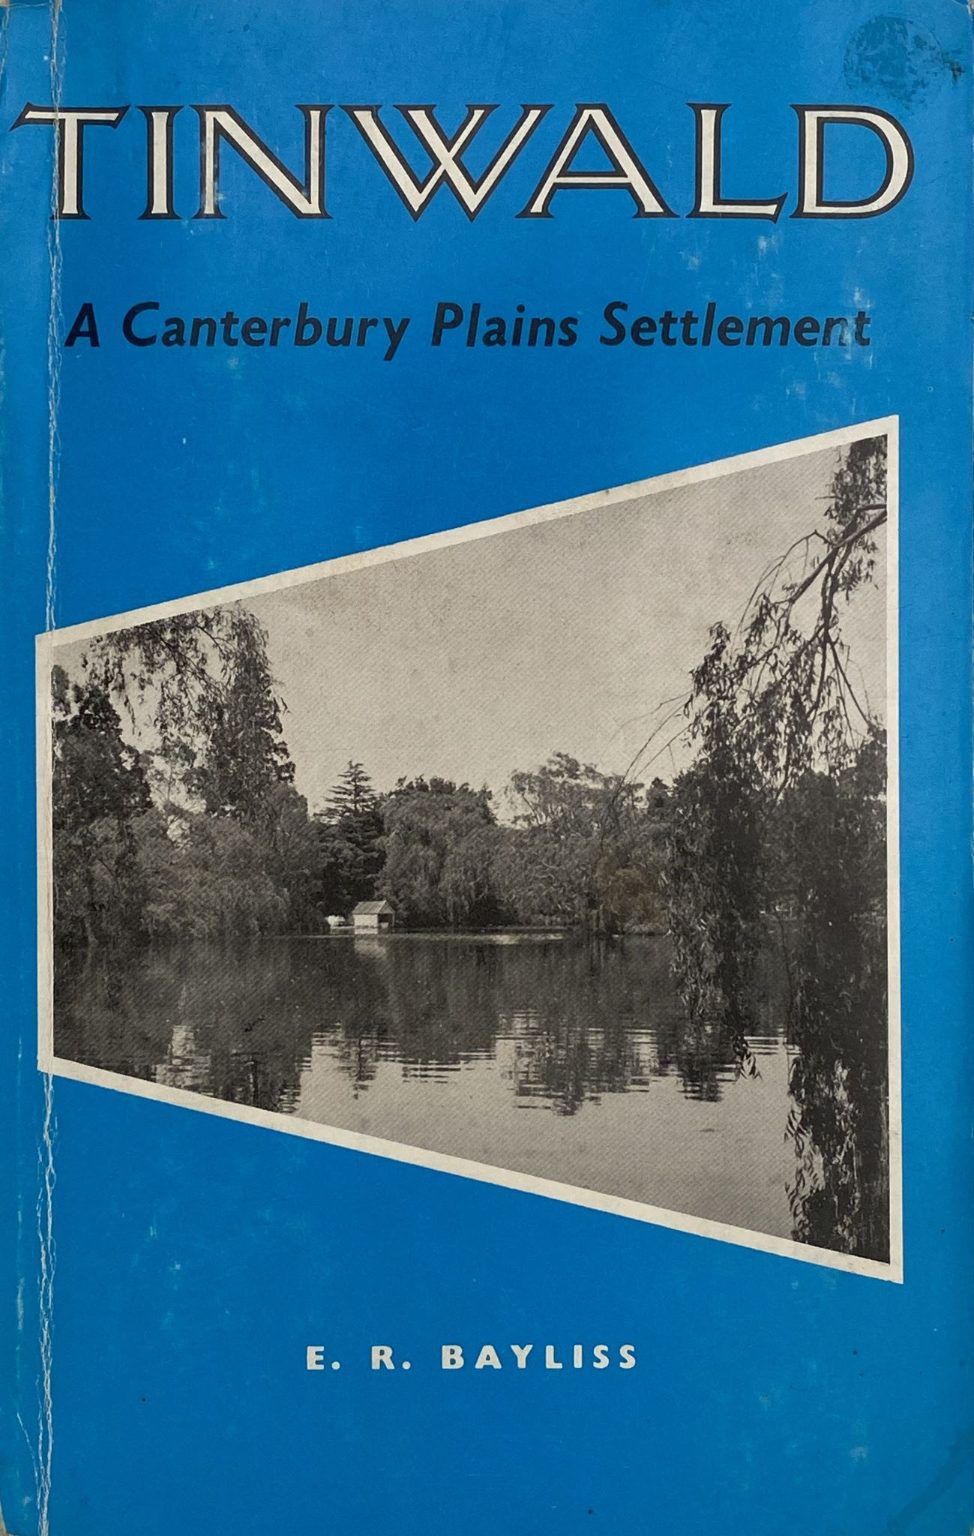 TINWALD: A Canterbury Plains Settlement